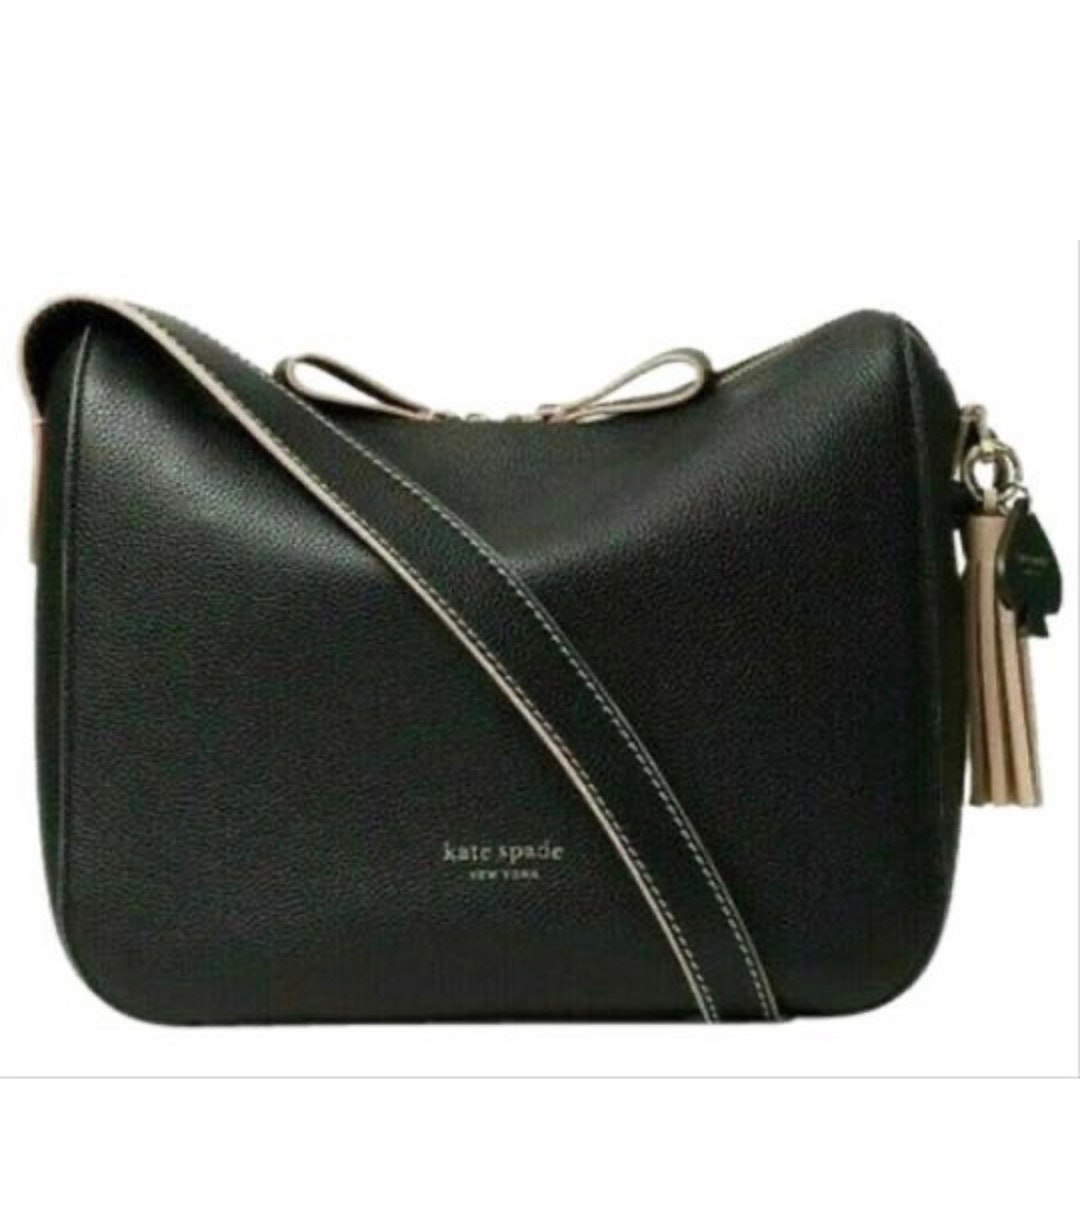 Kate Spade Anyday Medium Shoulder Bag Cream Leather PXR00248 White NWT $298  FS